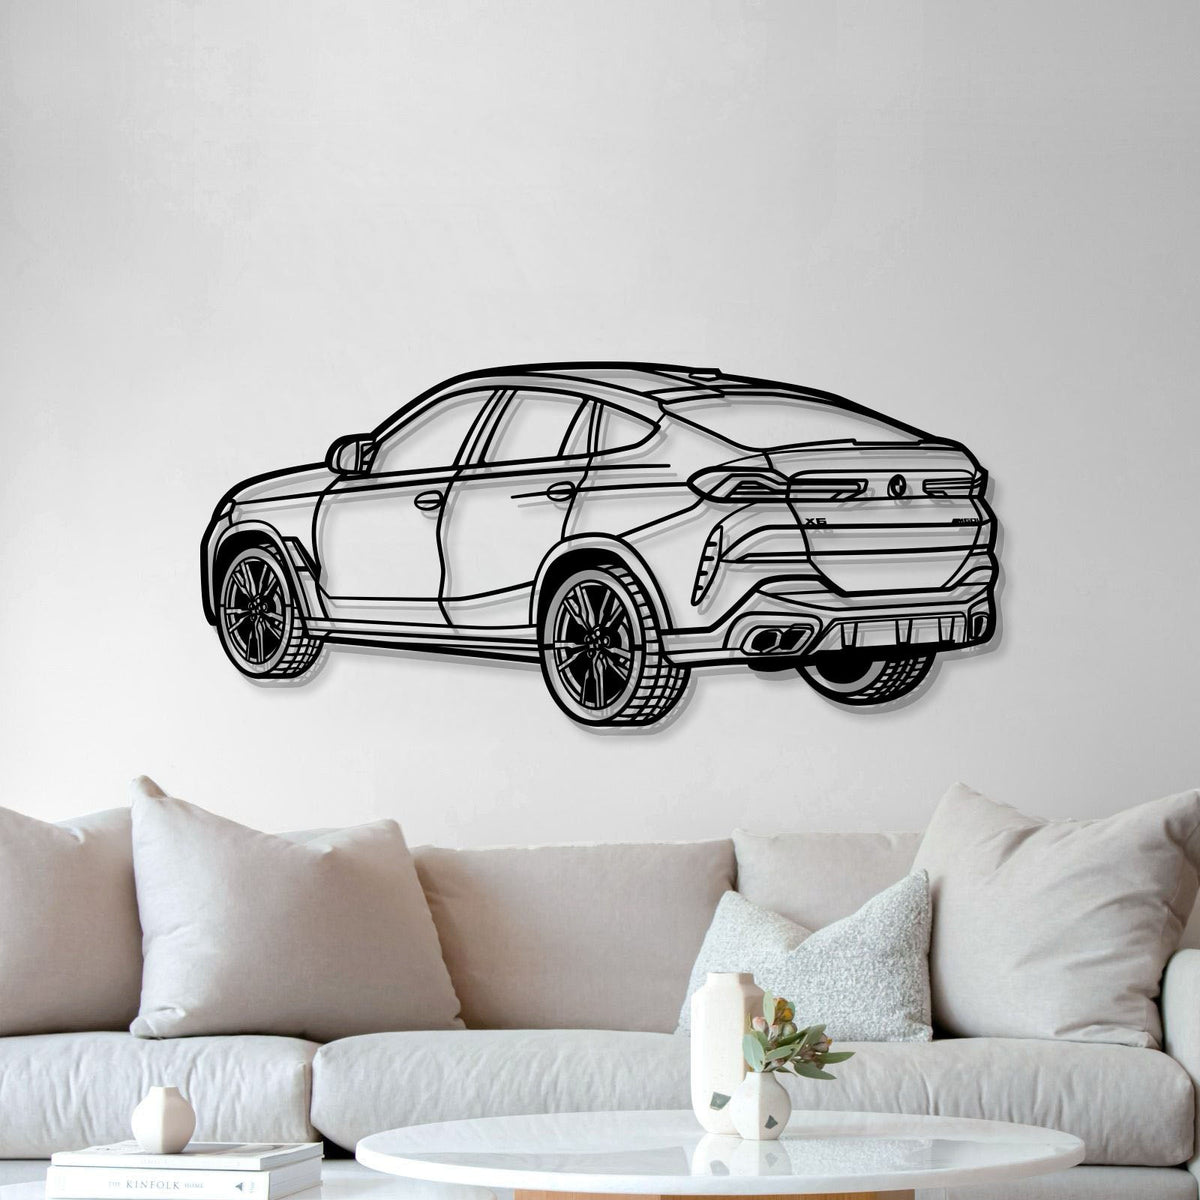 X6 PERSPECTIVE METAL CAR WALL ART